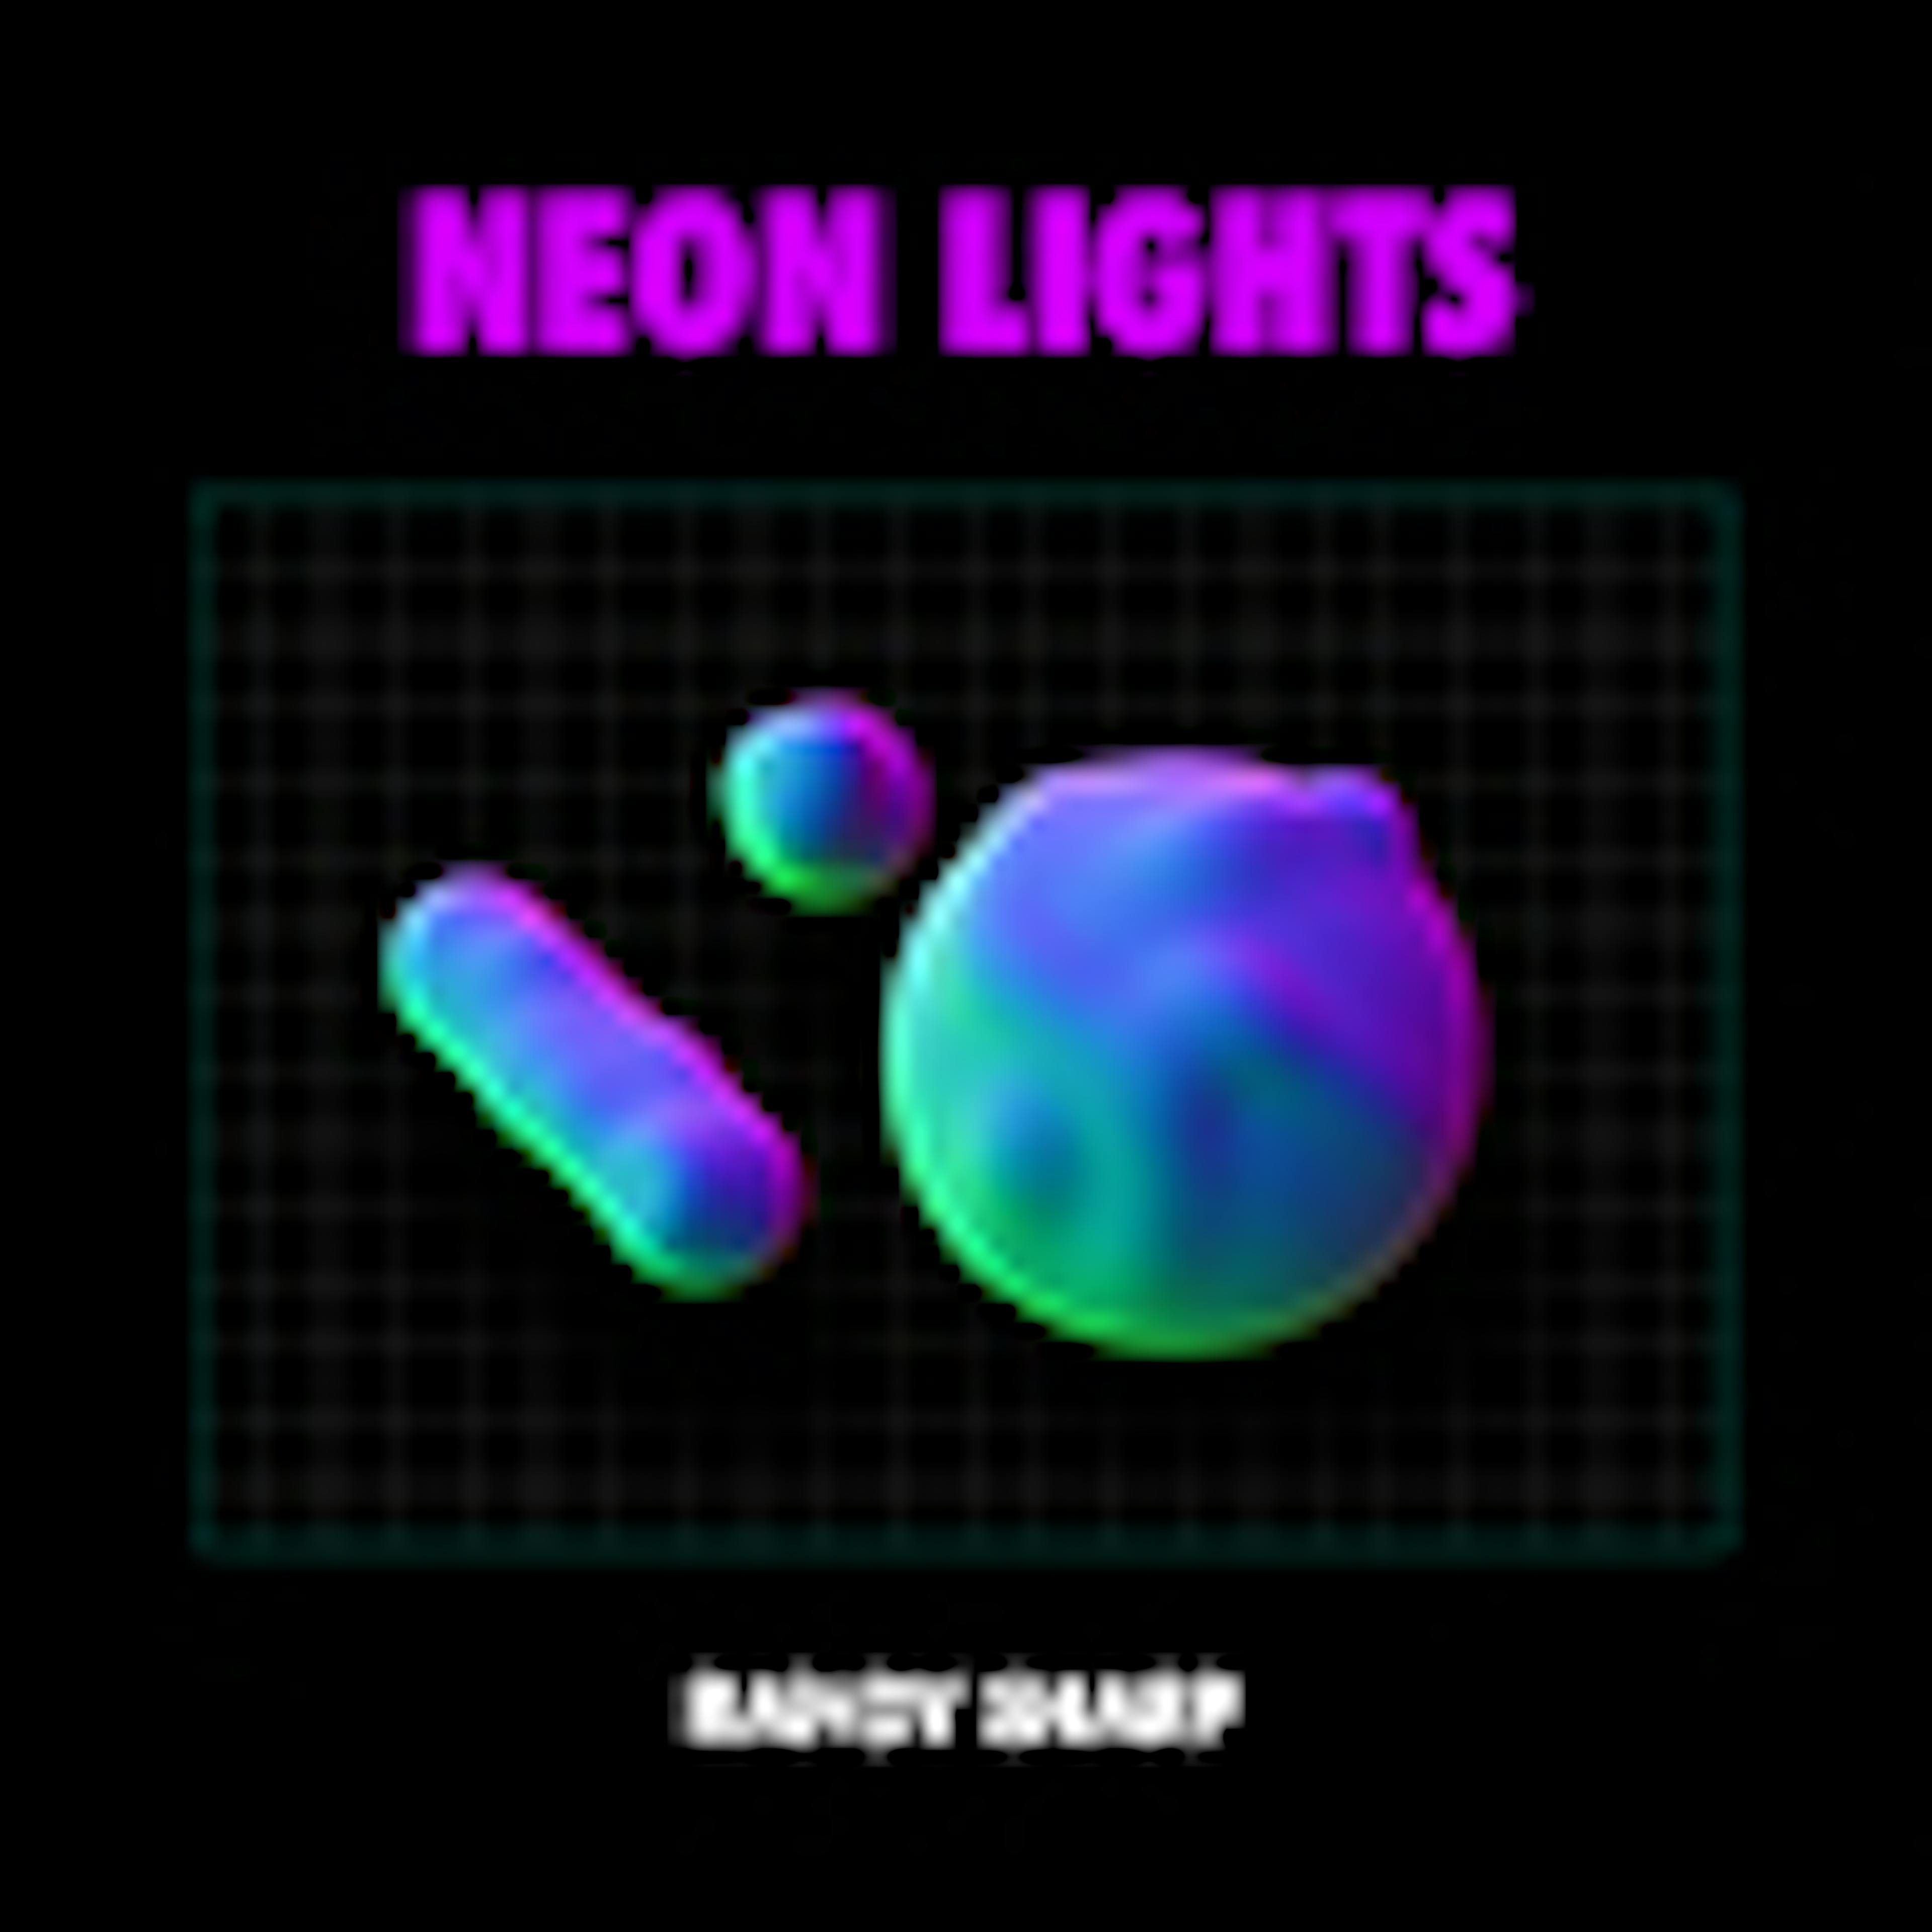 Neon Lights album cover